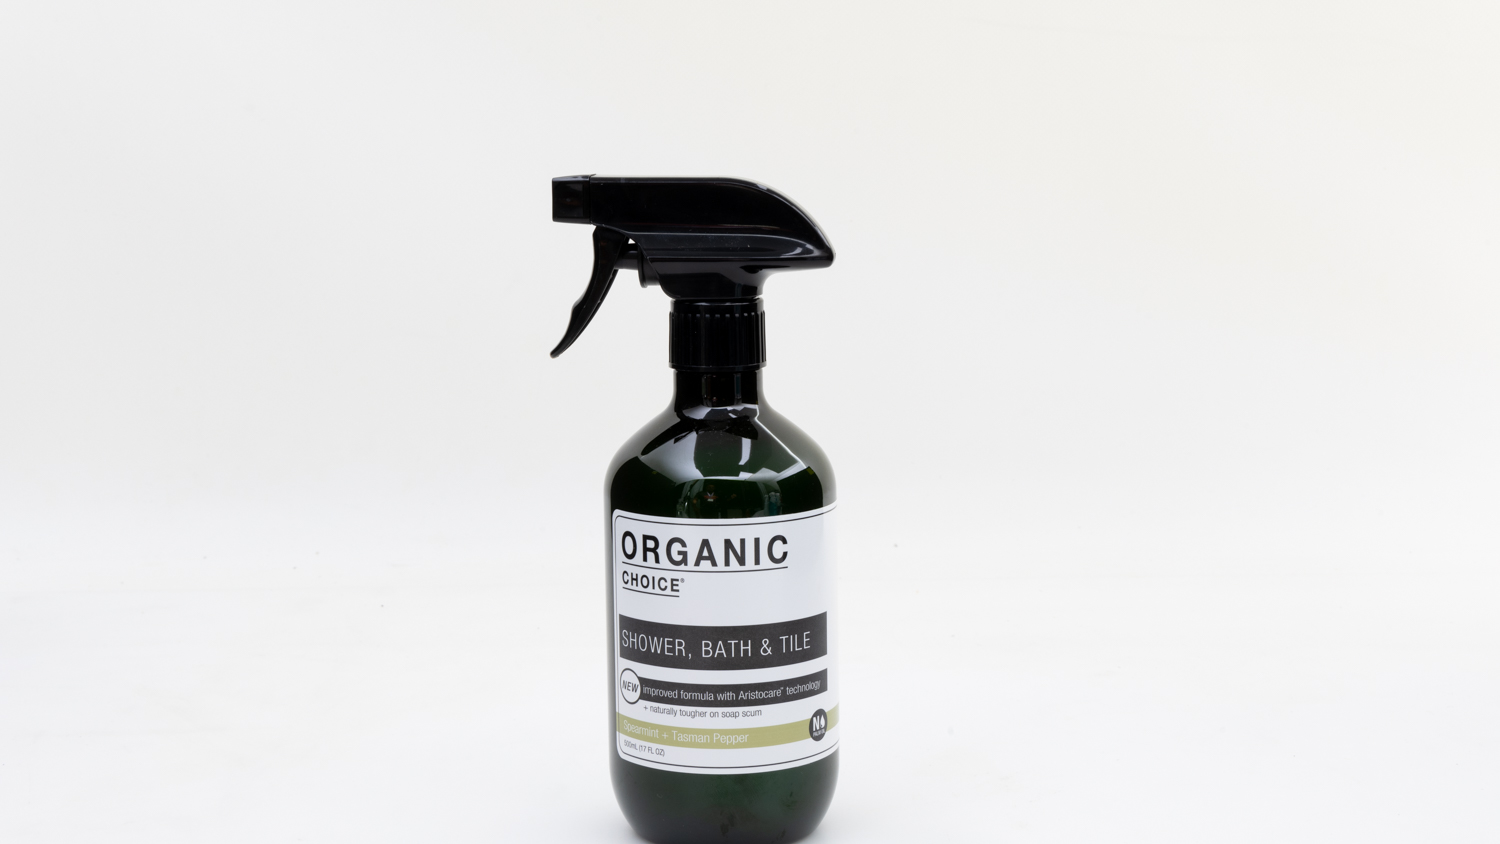 Organic Choice Shower, Bath & Tile carousel image